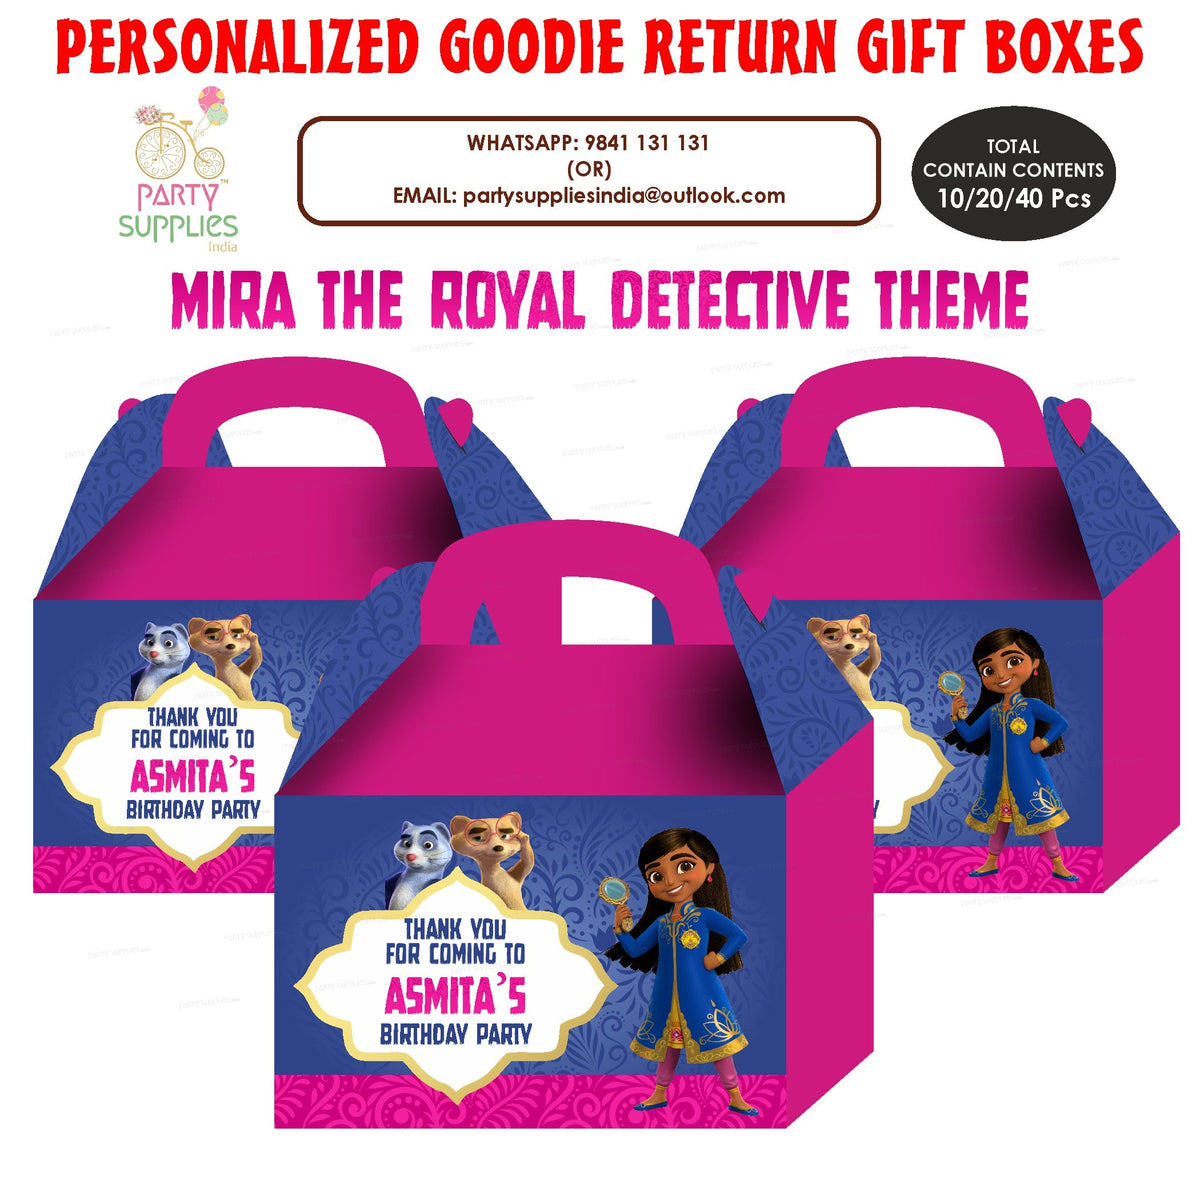 PSI Mira the Royal Detective Theme Goodie Return Gift Boxes